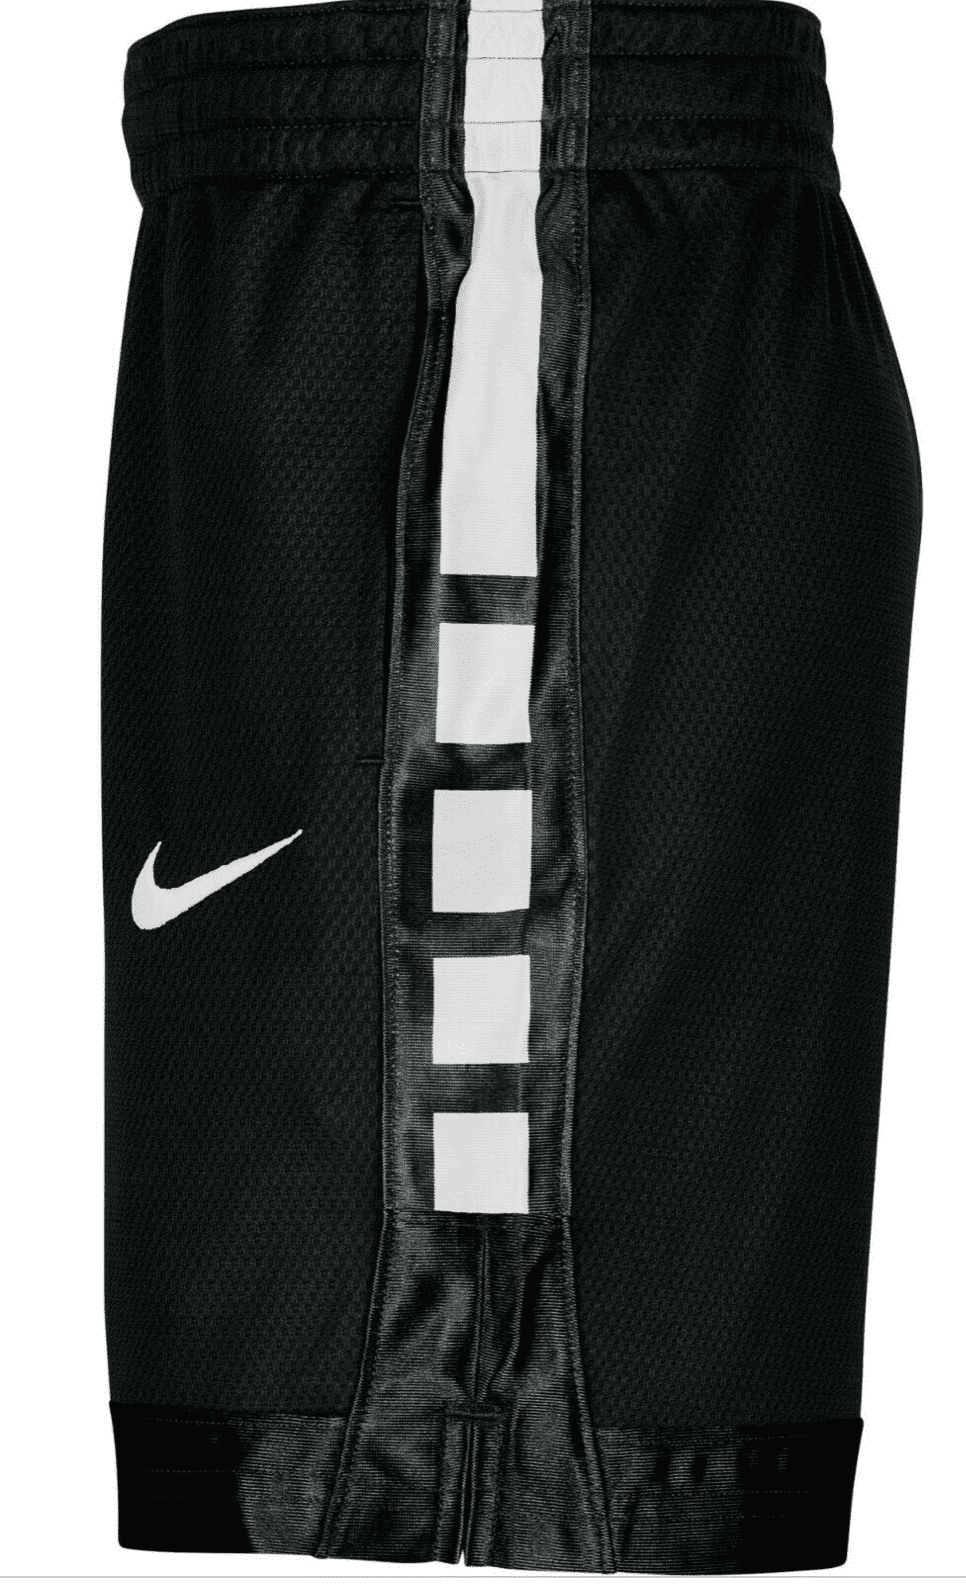 Nike Pro Combat 5-padded compression shorts size large Dri-fit